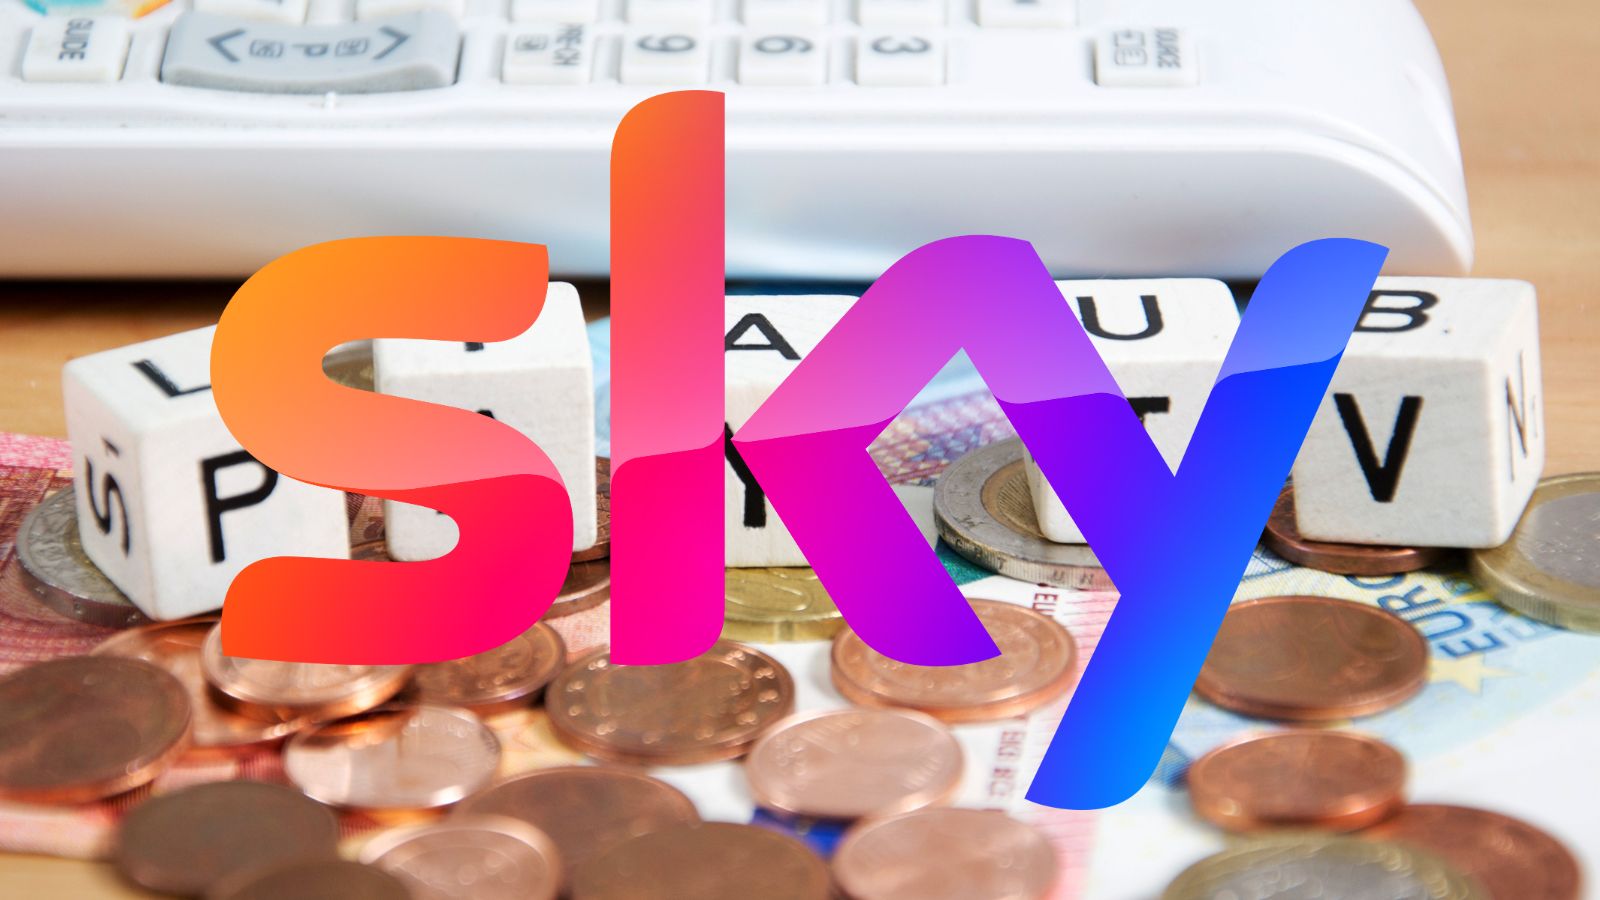 Sky Gratis, canali di Now TV rubati e venduti su Telegram